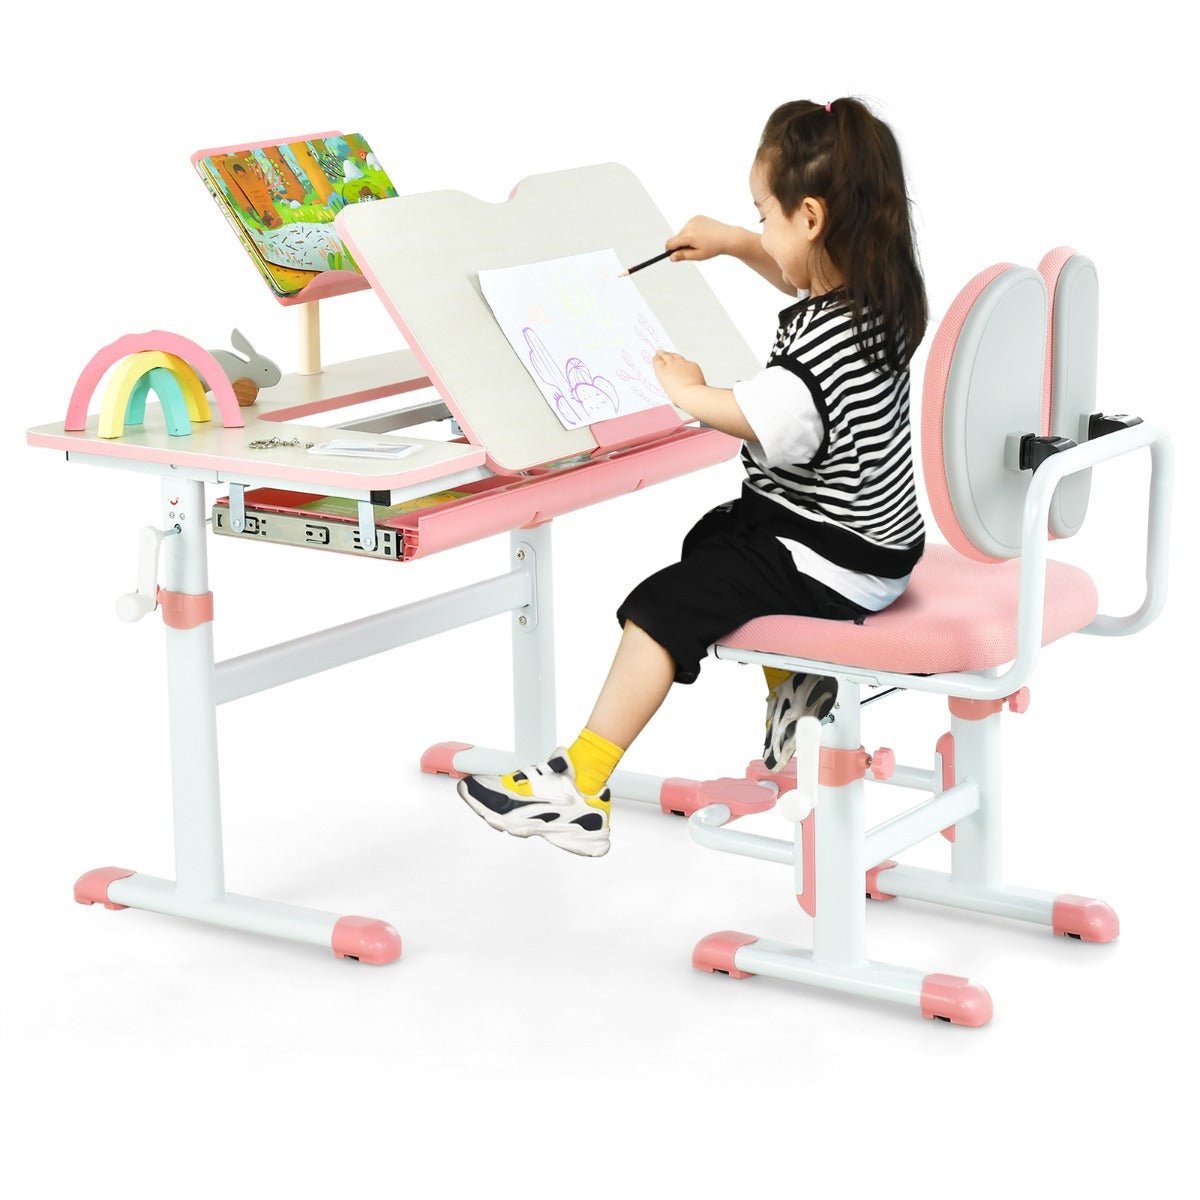 Explore Learning: Pink Kid's Study Desk & Chair Set at Kids Mega Mart